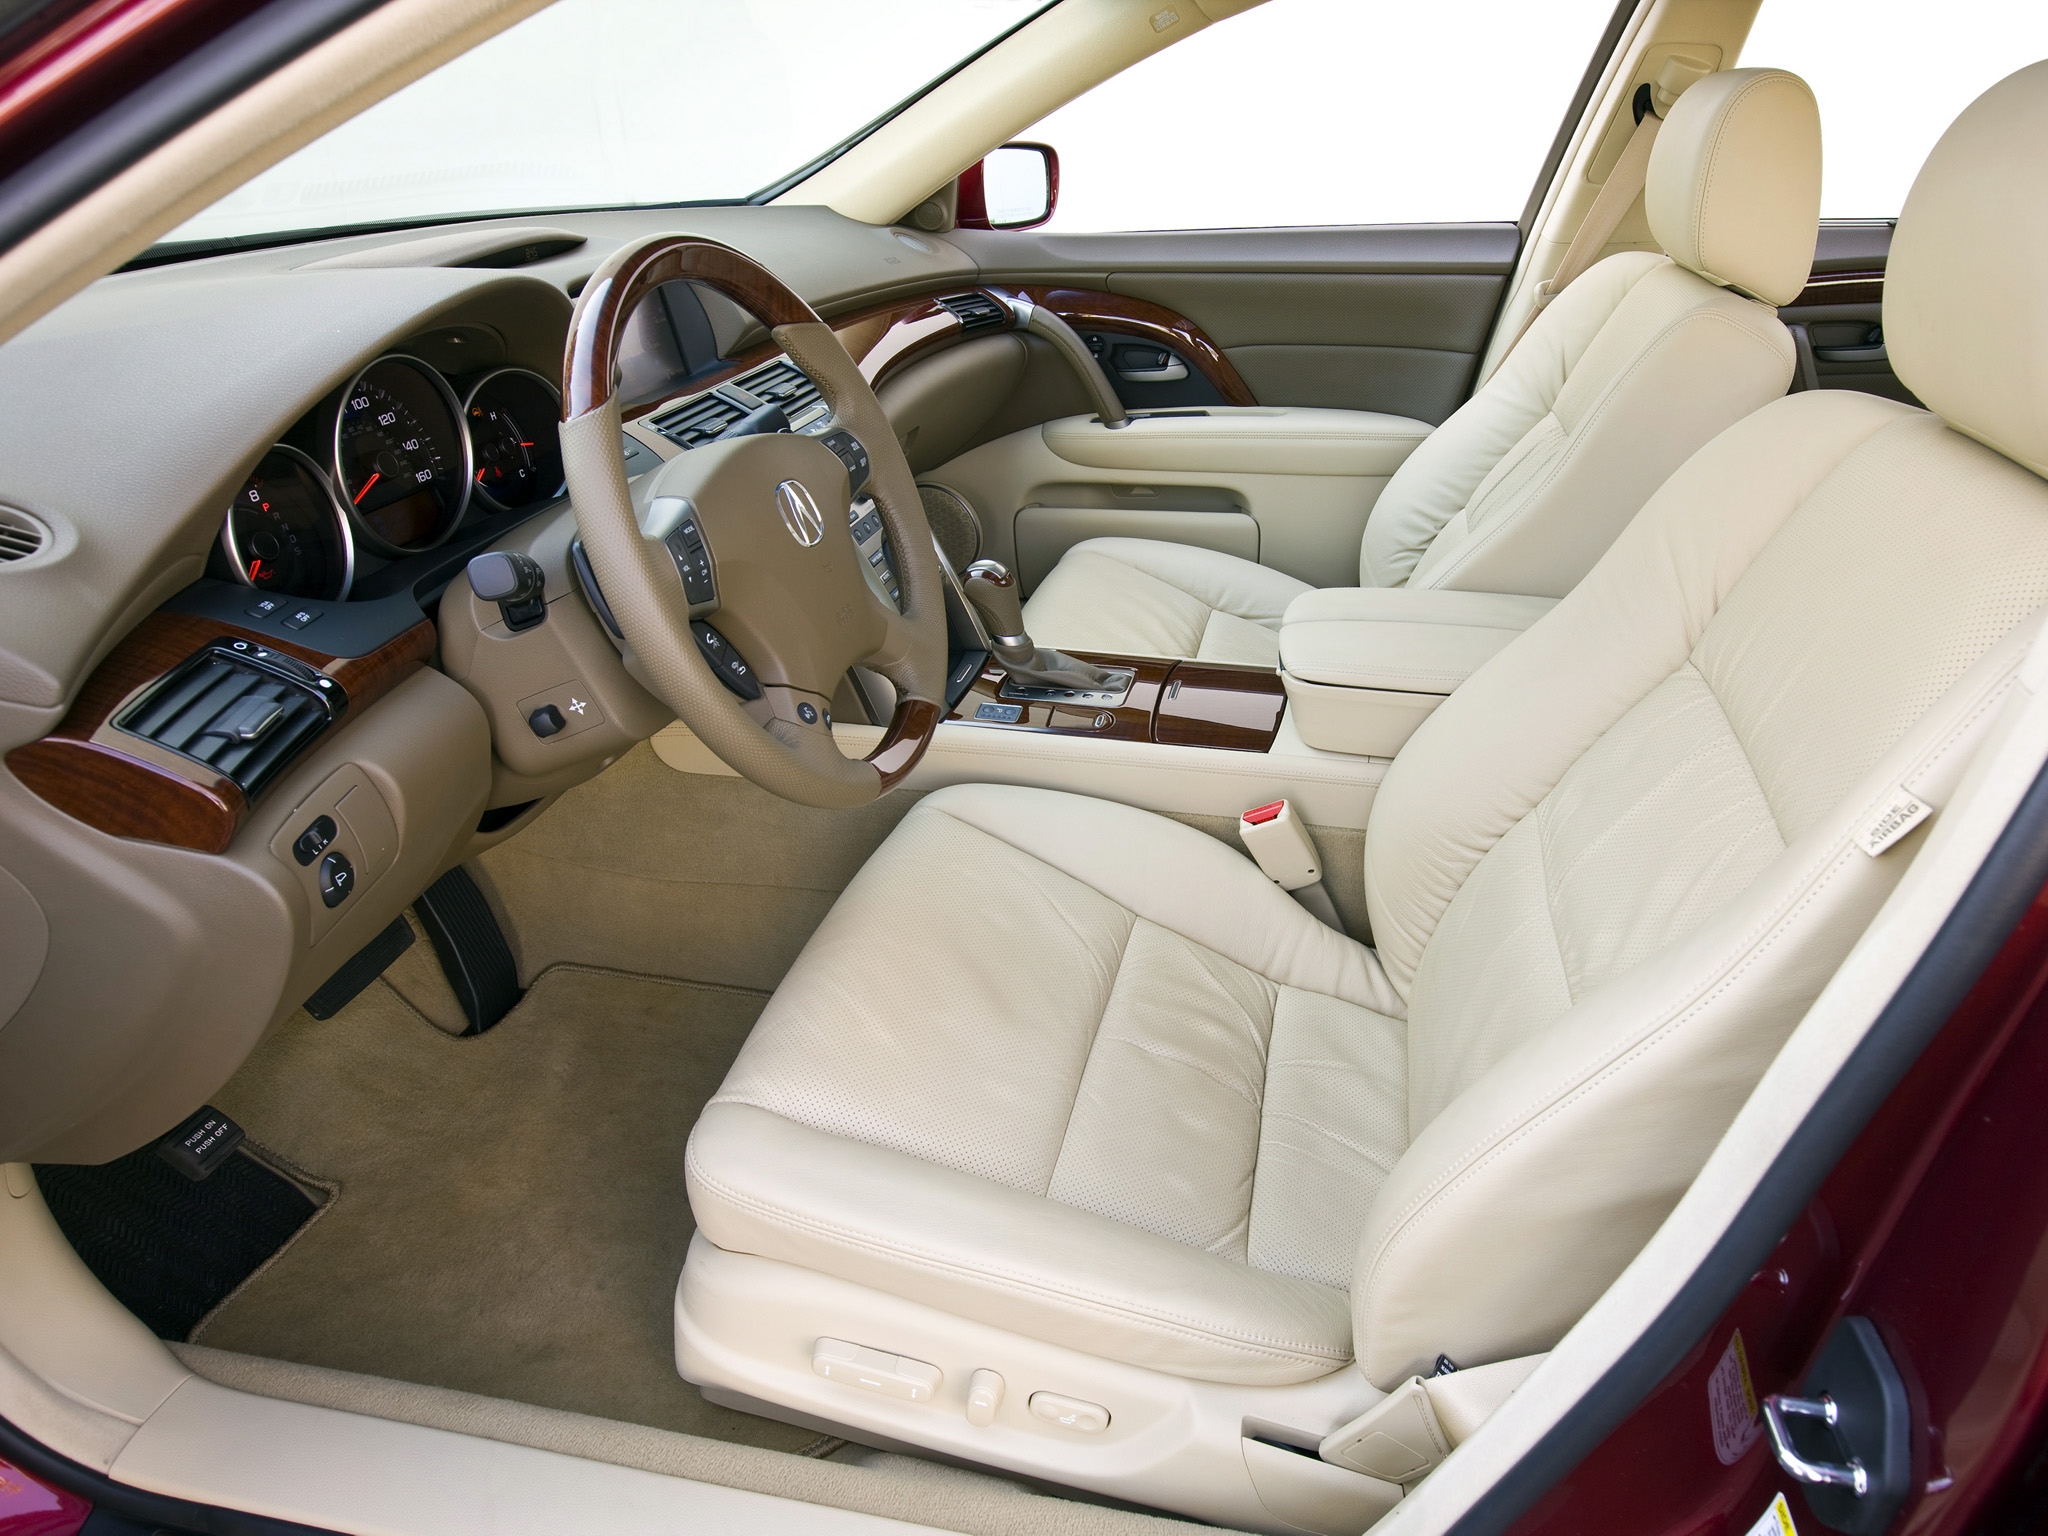 acura, interior, cars, akura, steering wheel, rudder, salon, speedometer, rl High Definition image